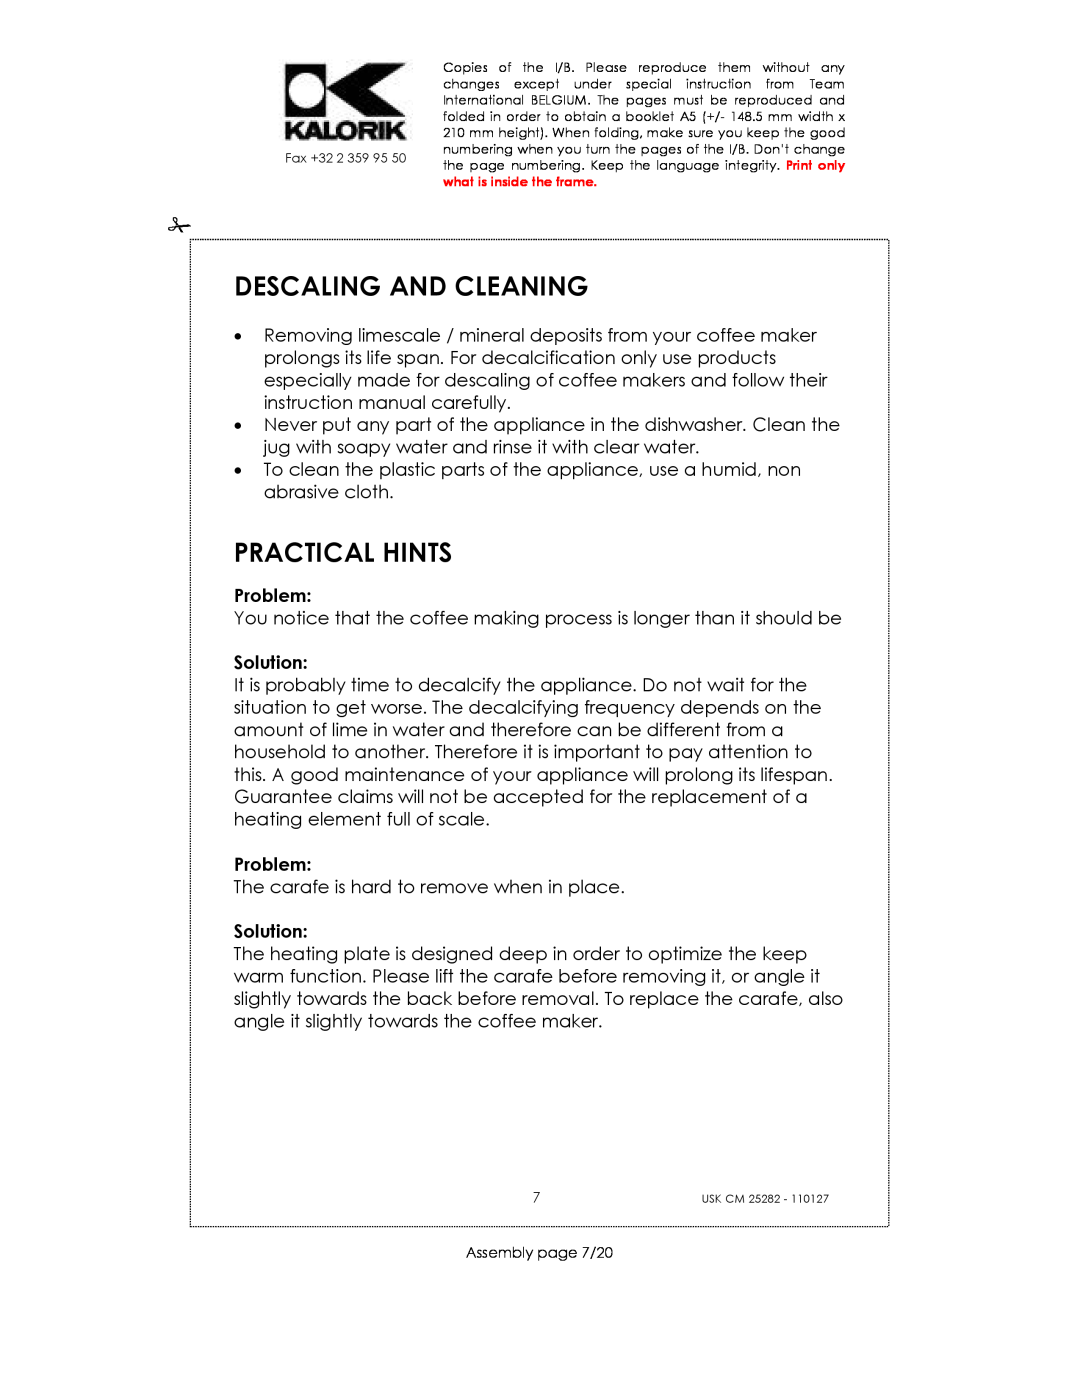 Kalorik USK CM 25282 manual Descaling And Cleaning, Practical Hints, Problem, Solution 